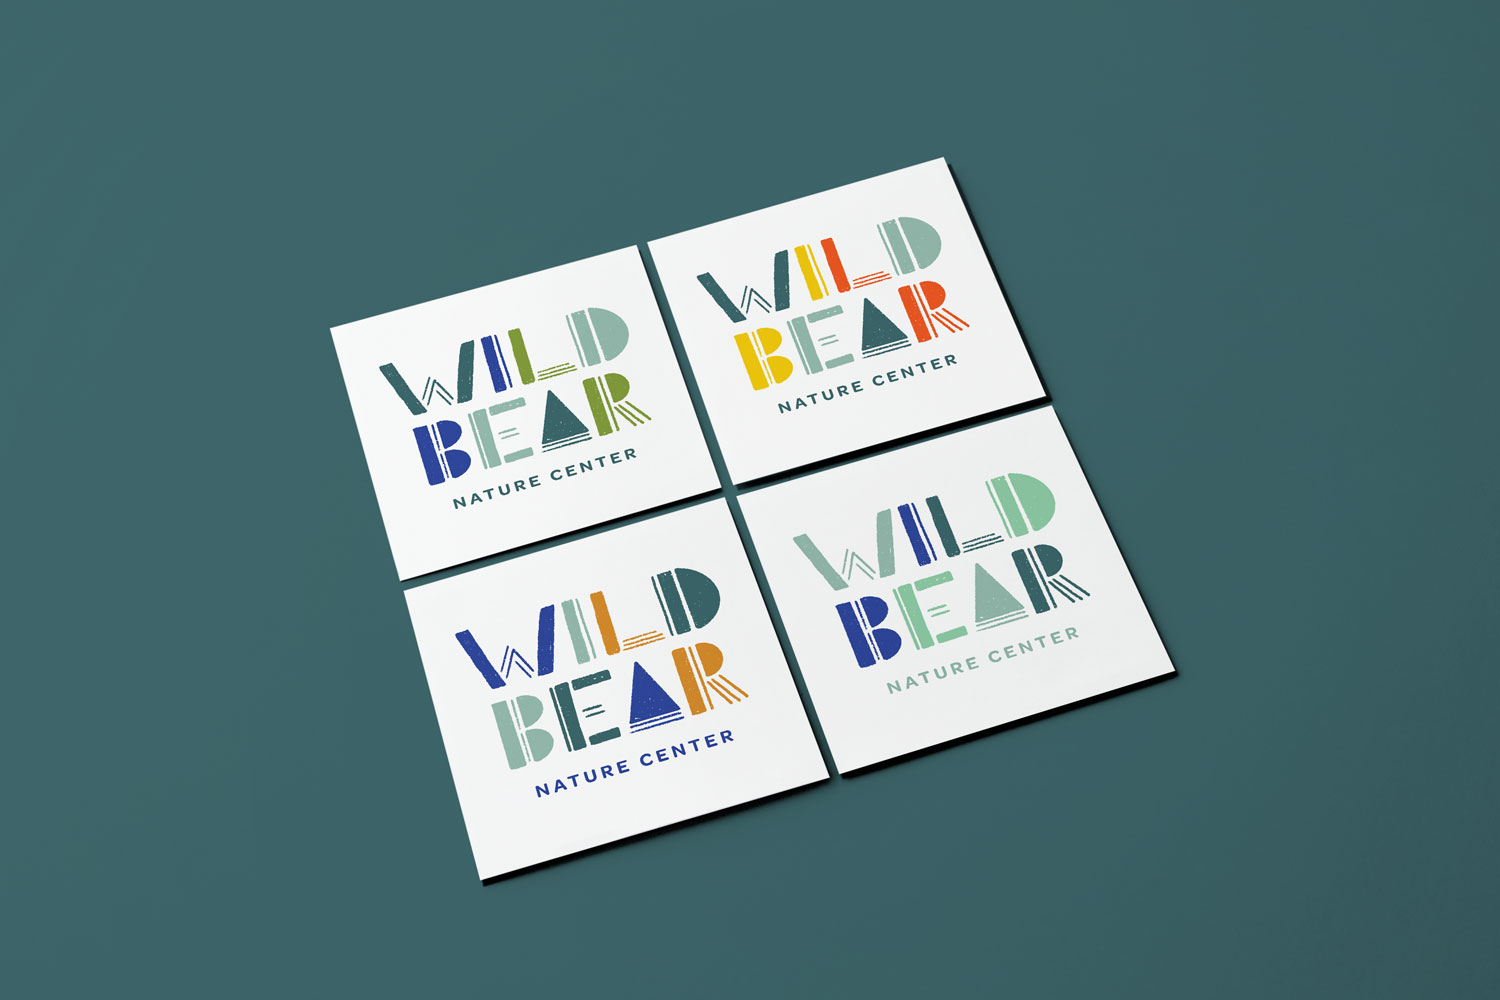 Wild Bear Brand identity by Megan Hillman Donovan